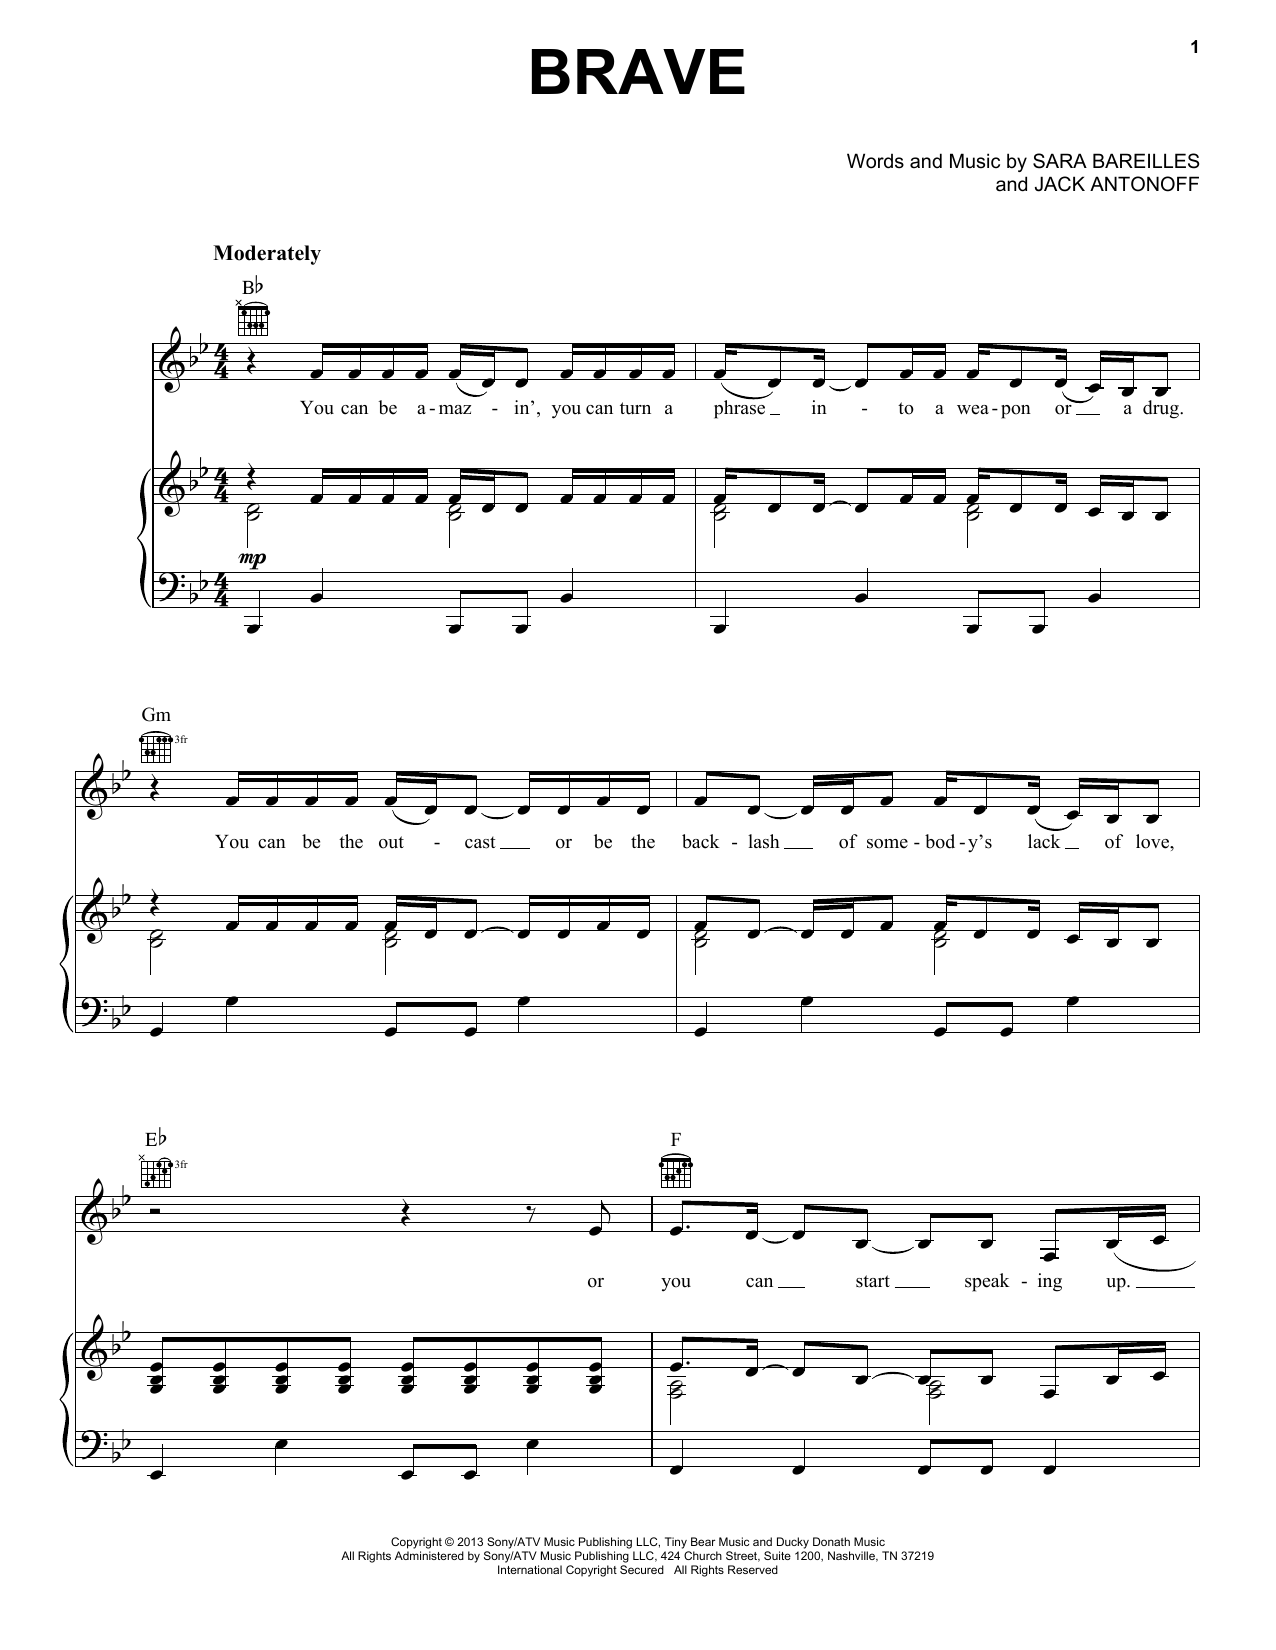 Sara Bareilles Brave Sheet Music Notes & Chords for Trumpet Duet - Download or Print PDF